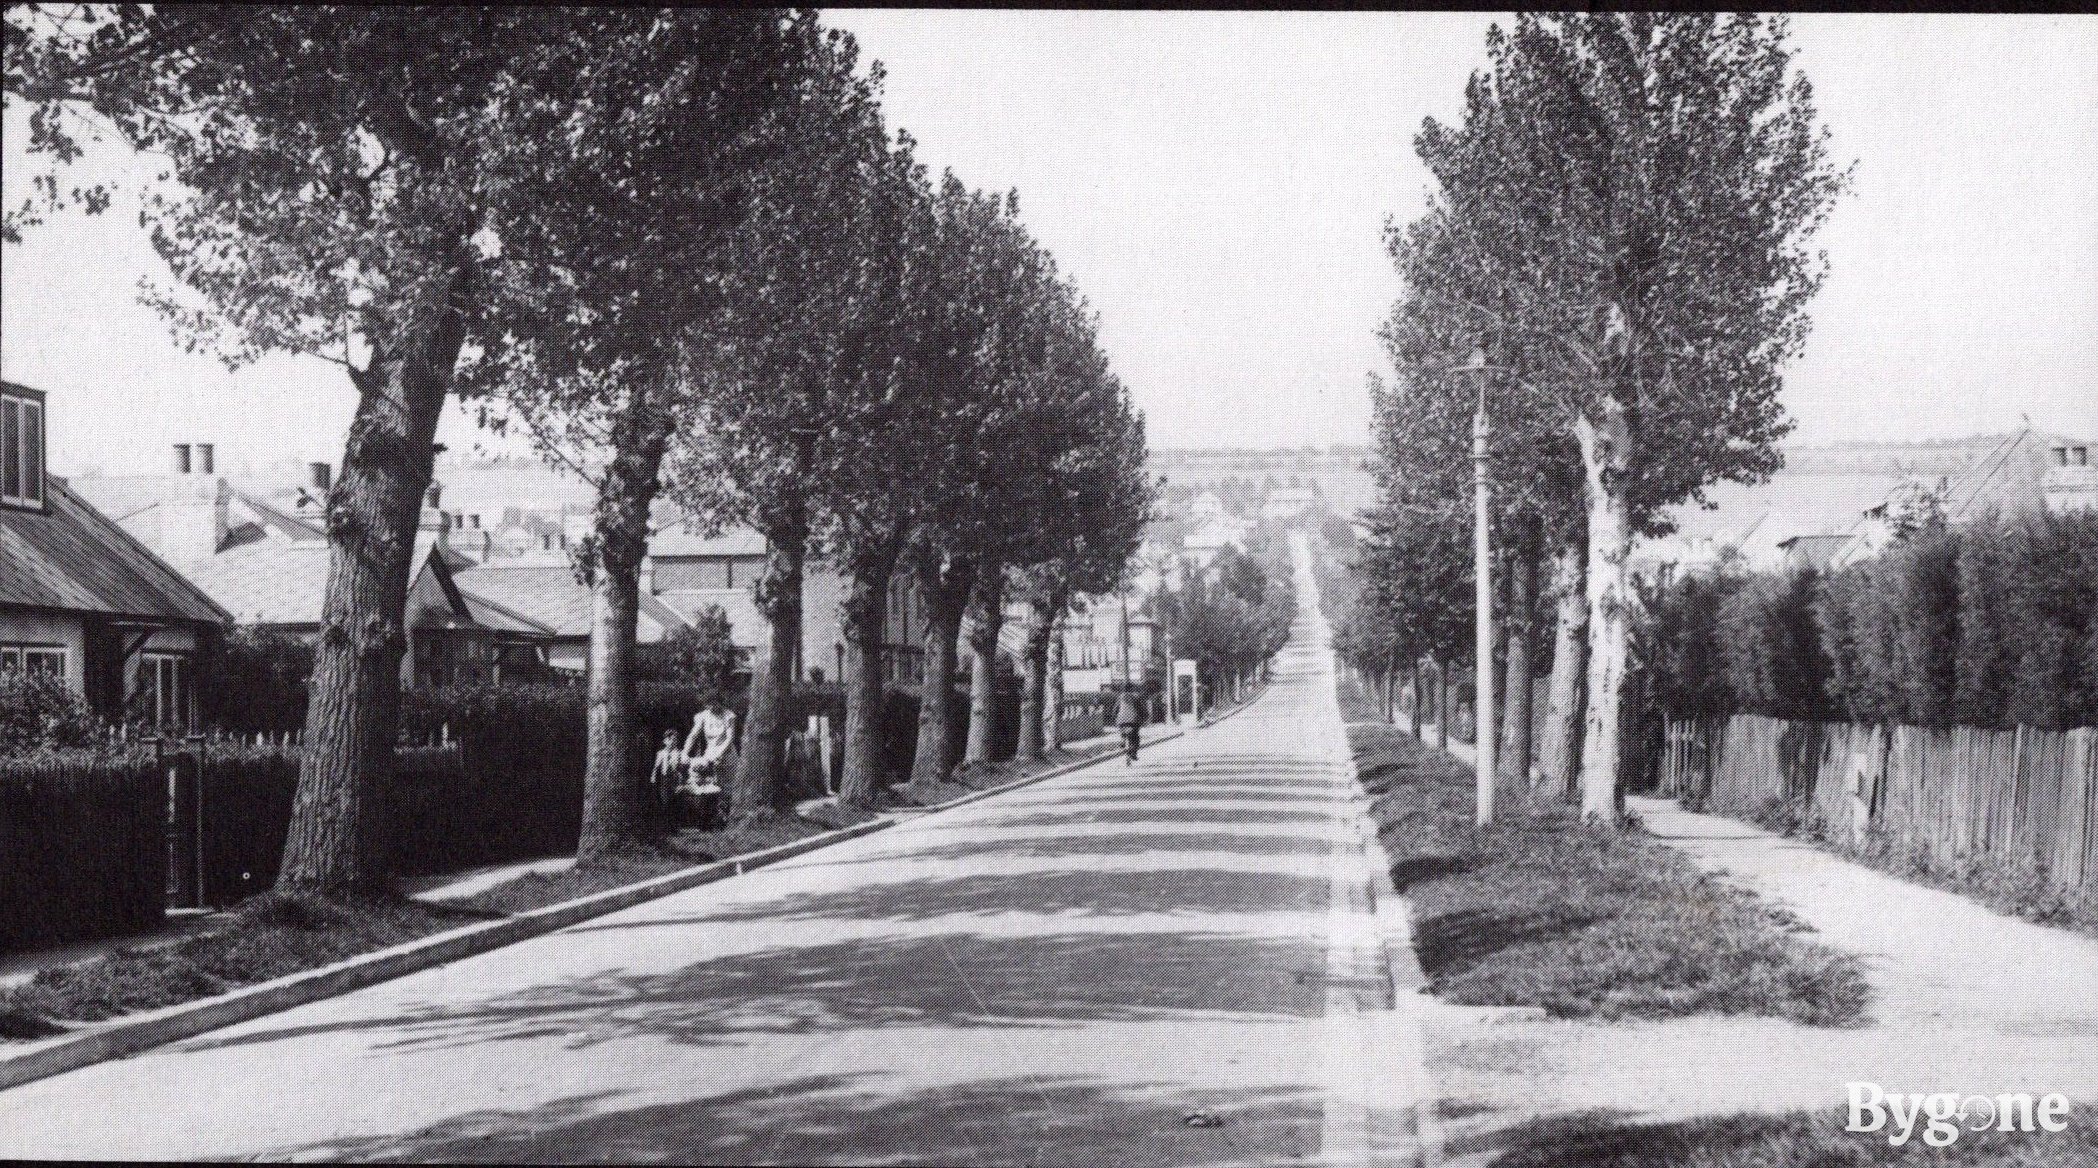 Station Road, Drayton, 1936